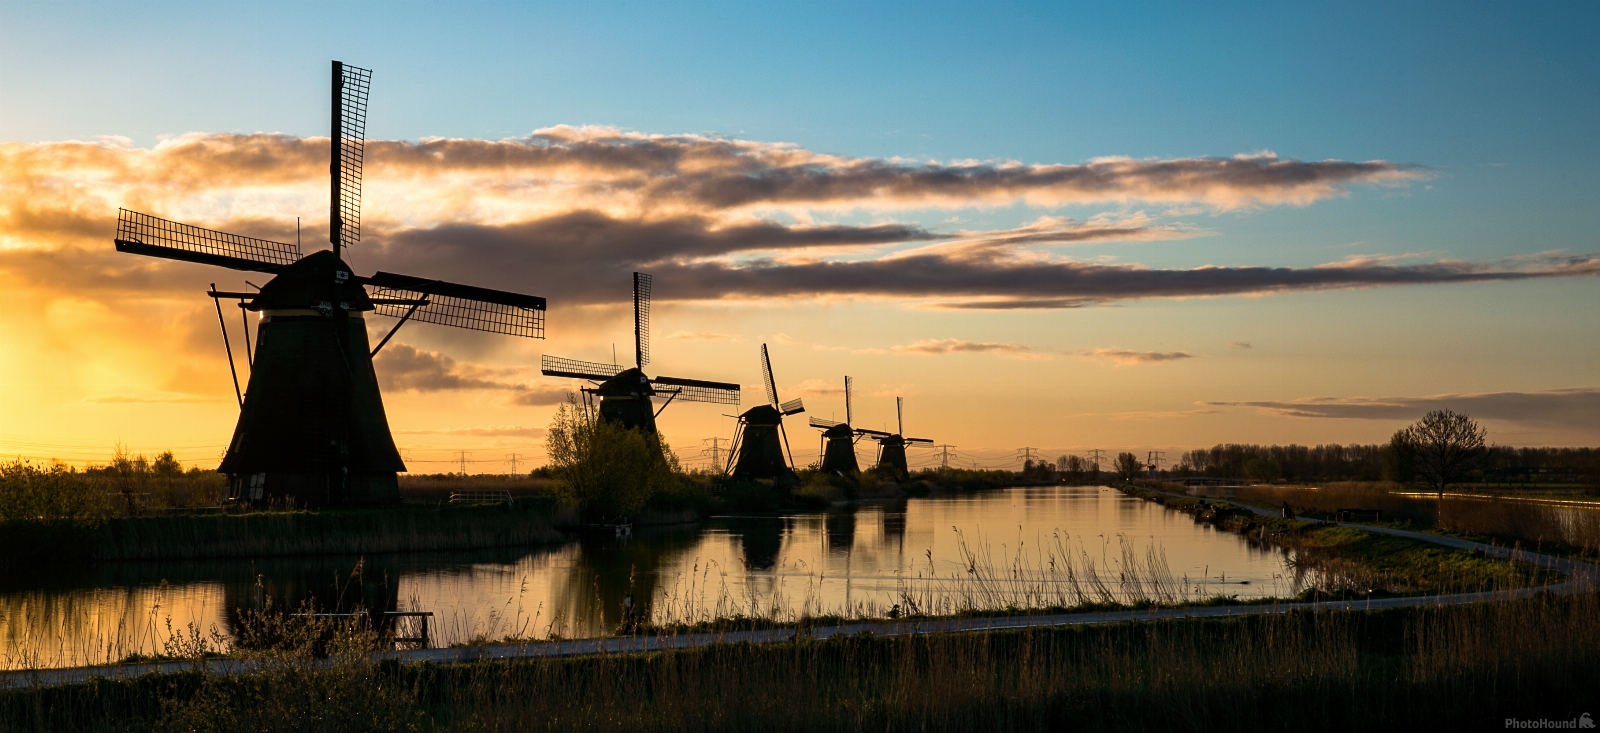 Image of Windmills of Kinderdijk by Jeff Martin